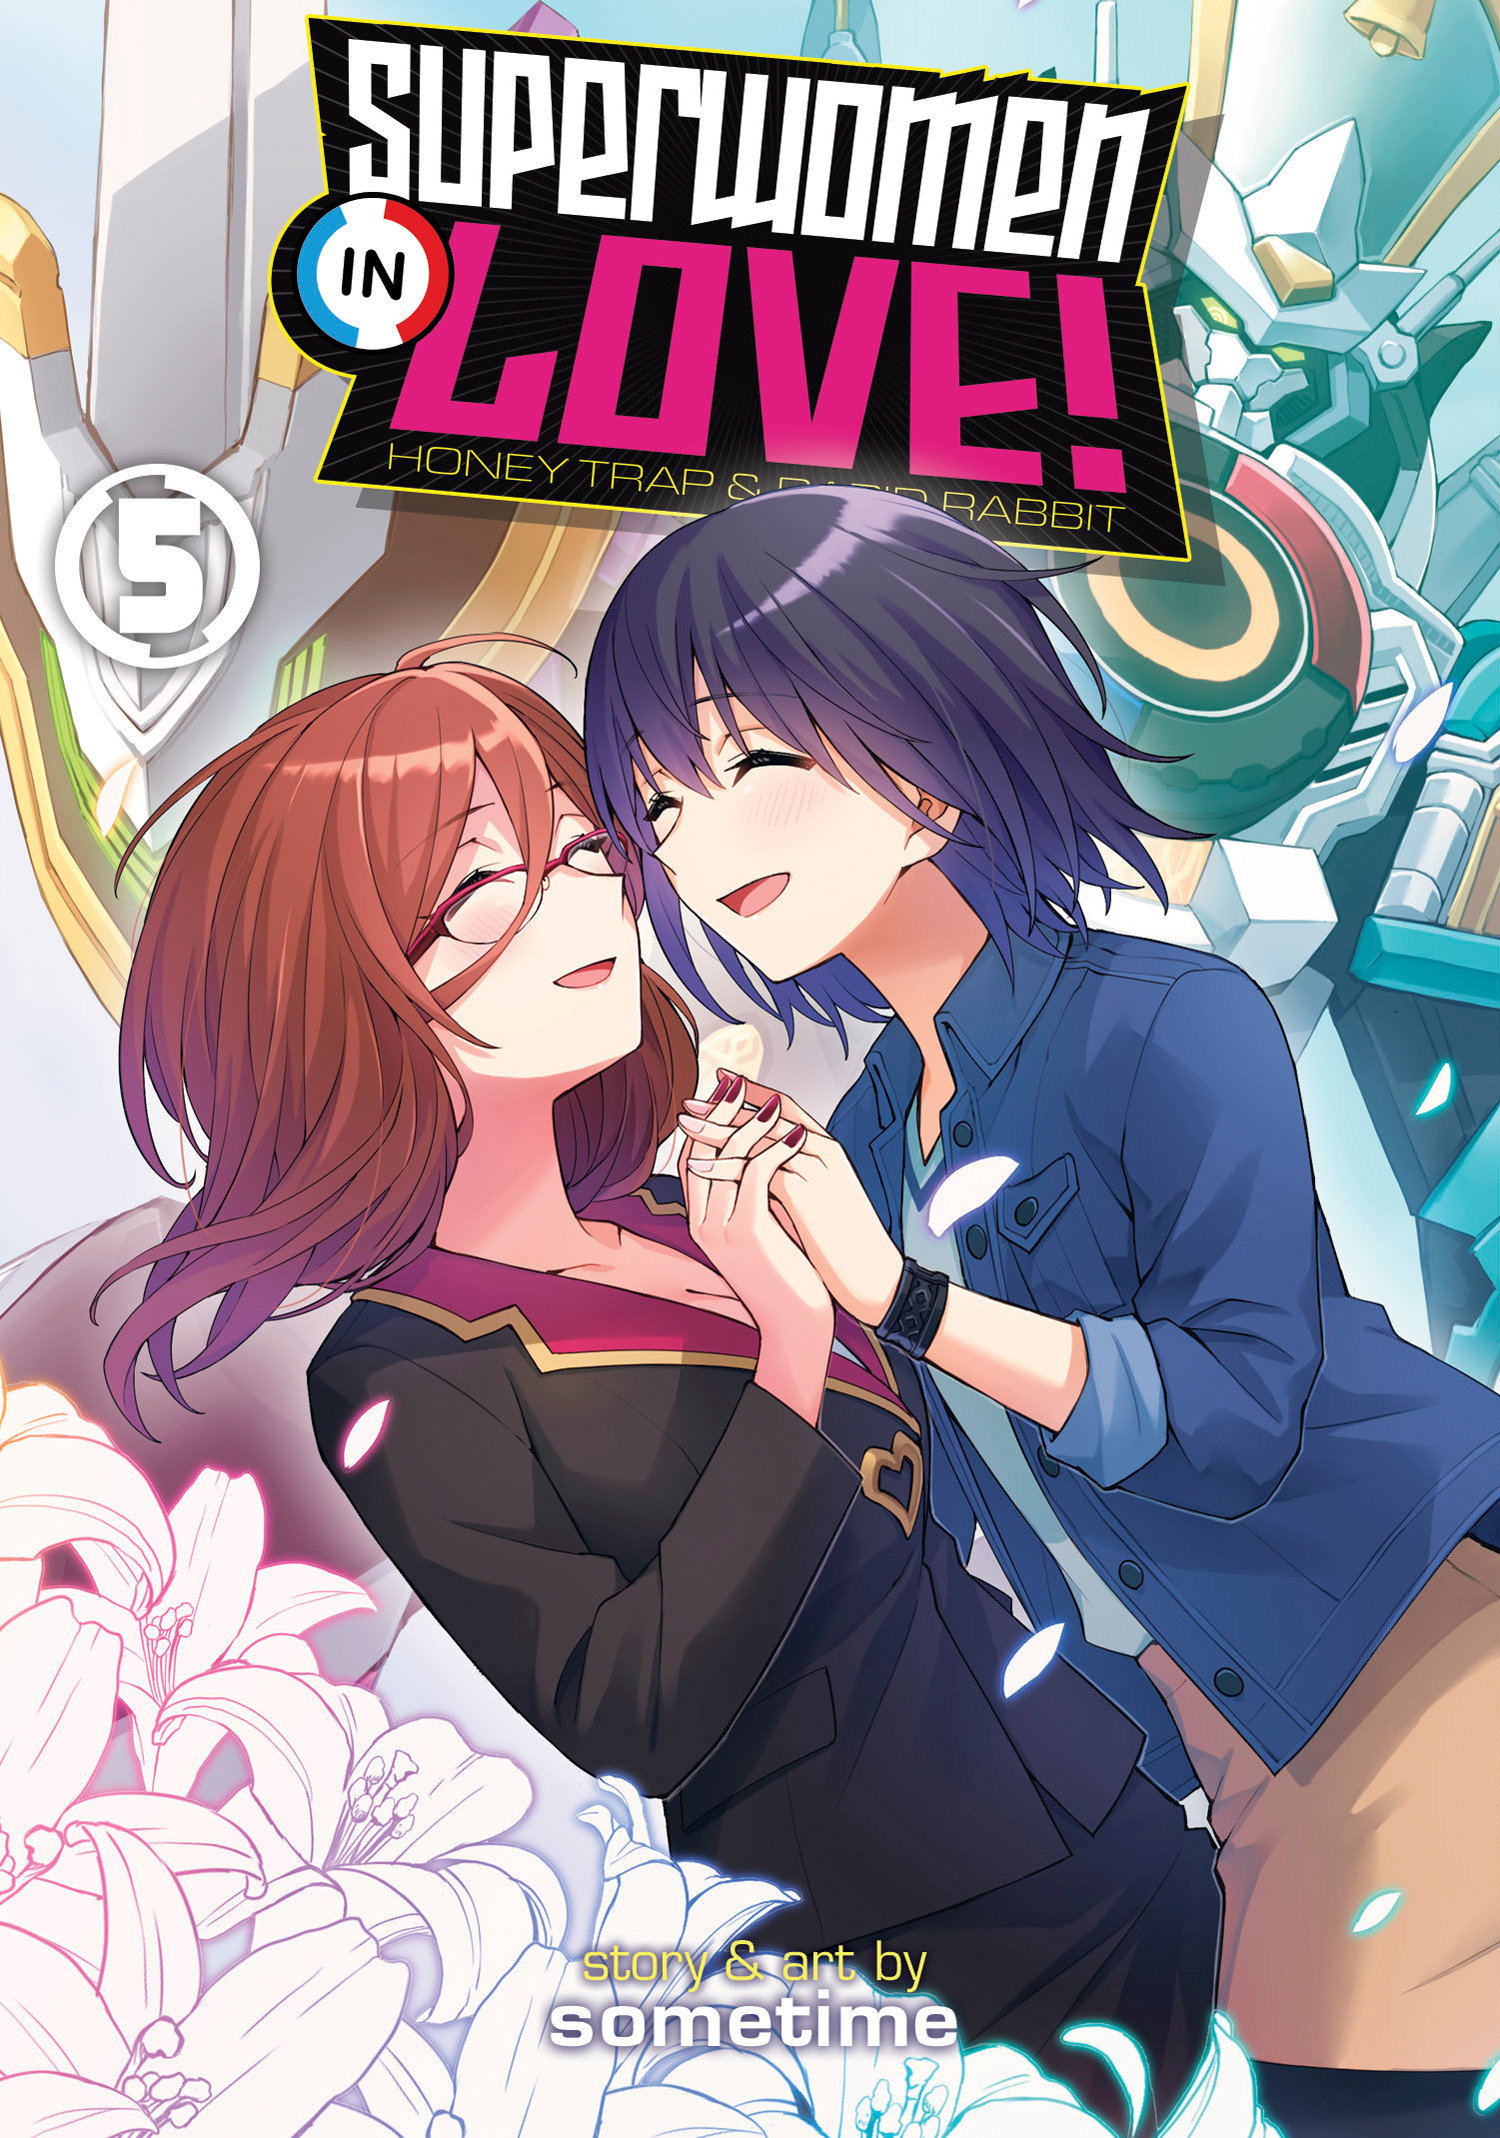 Superwomen In Love Manga Volume 5